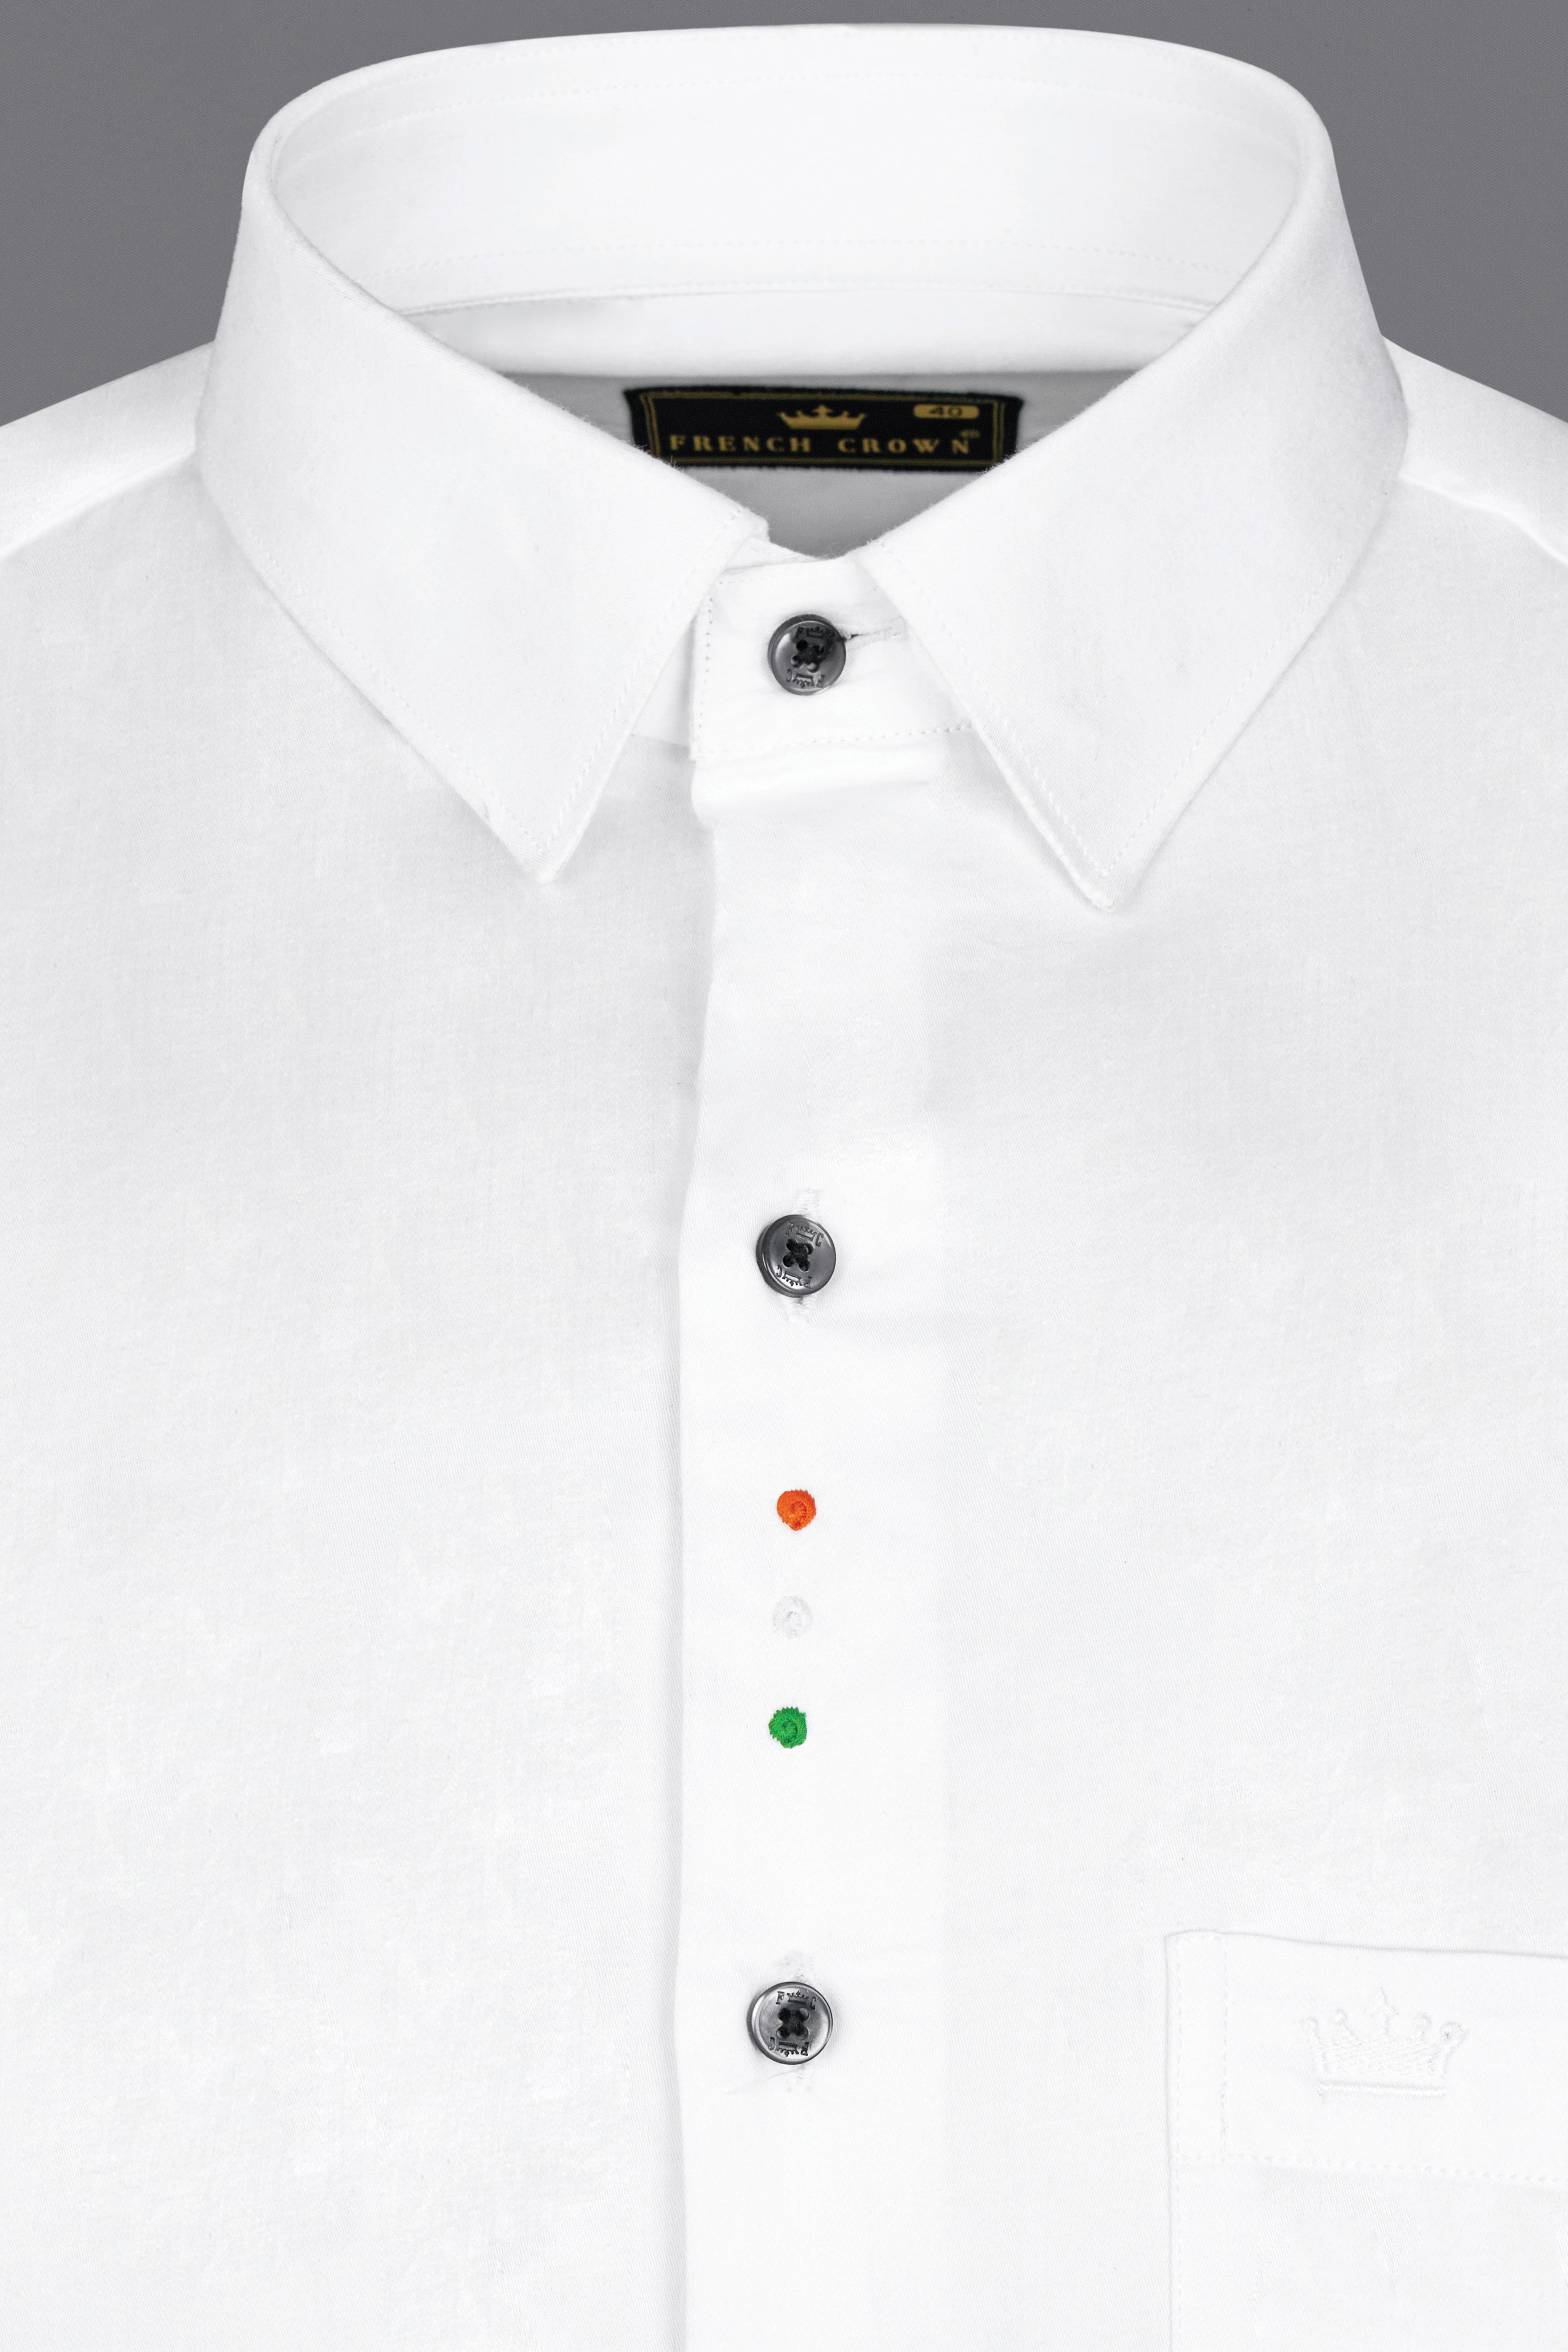 Bright White Subtle Sheen Tricolour Embroidered Under Second Button Super Soft Premium Cotton Shirt